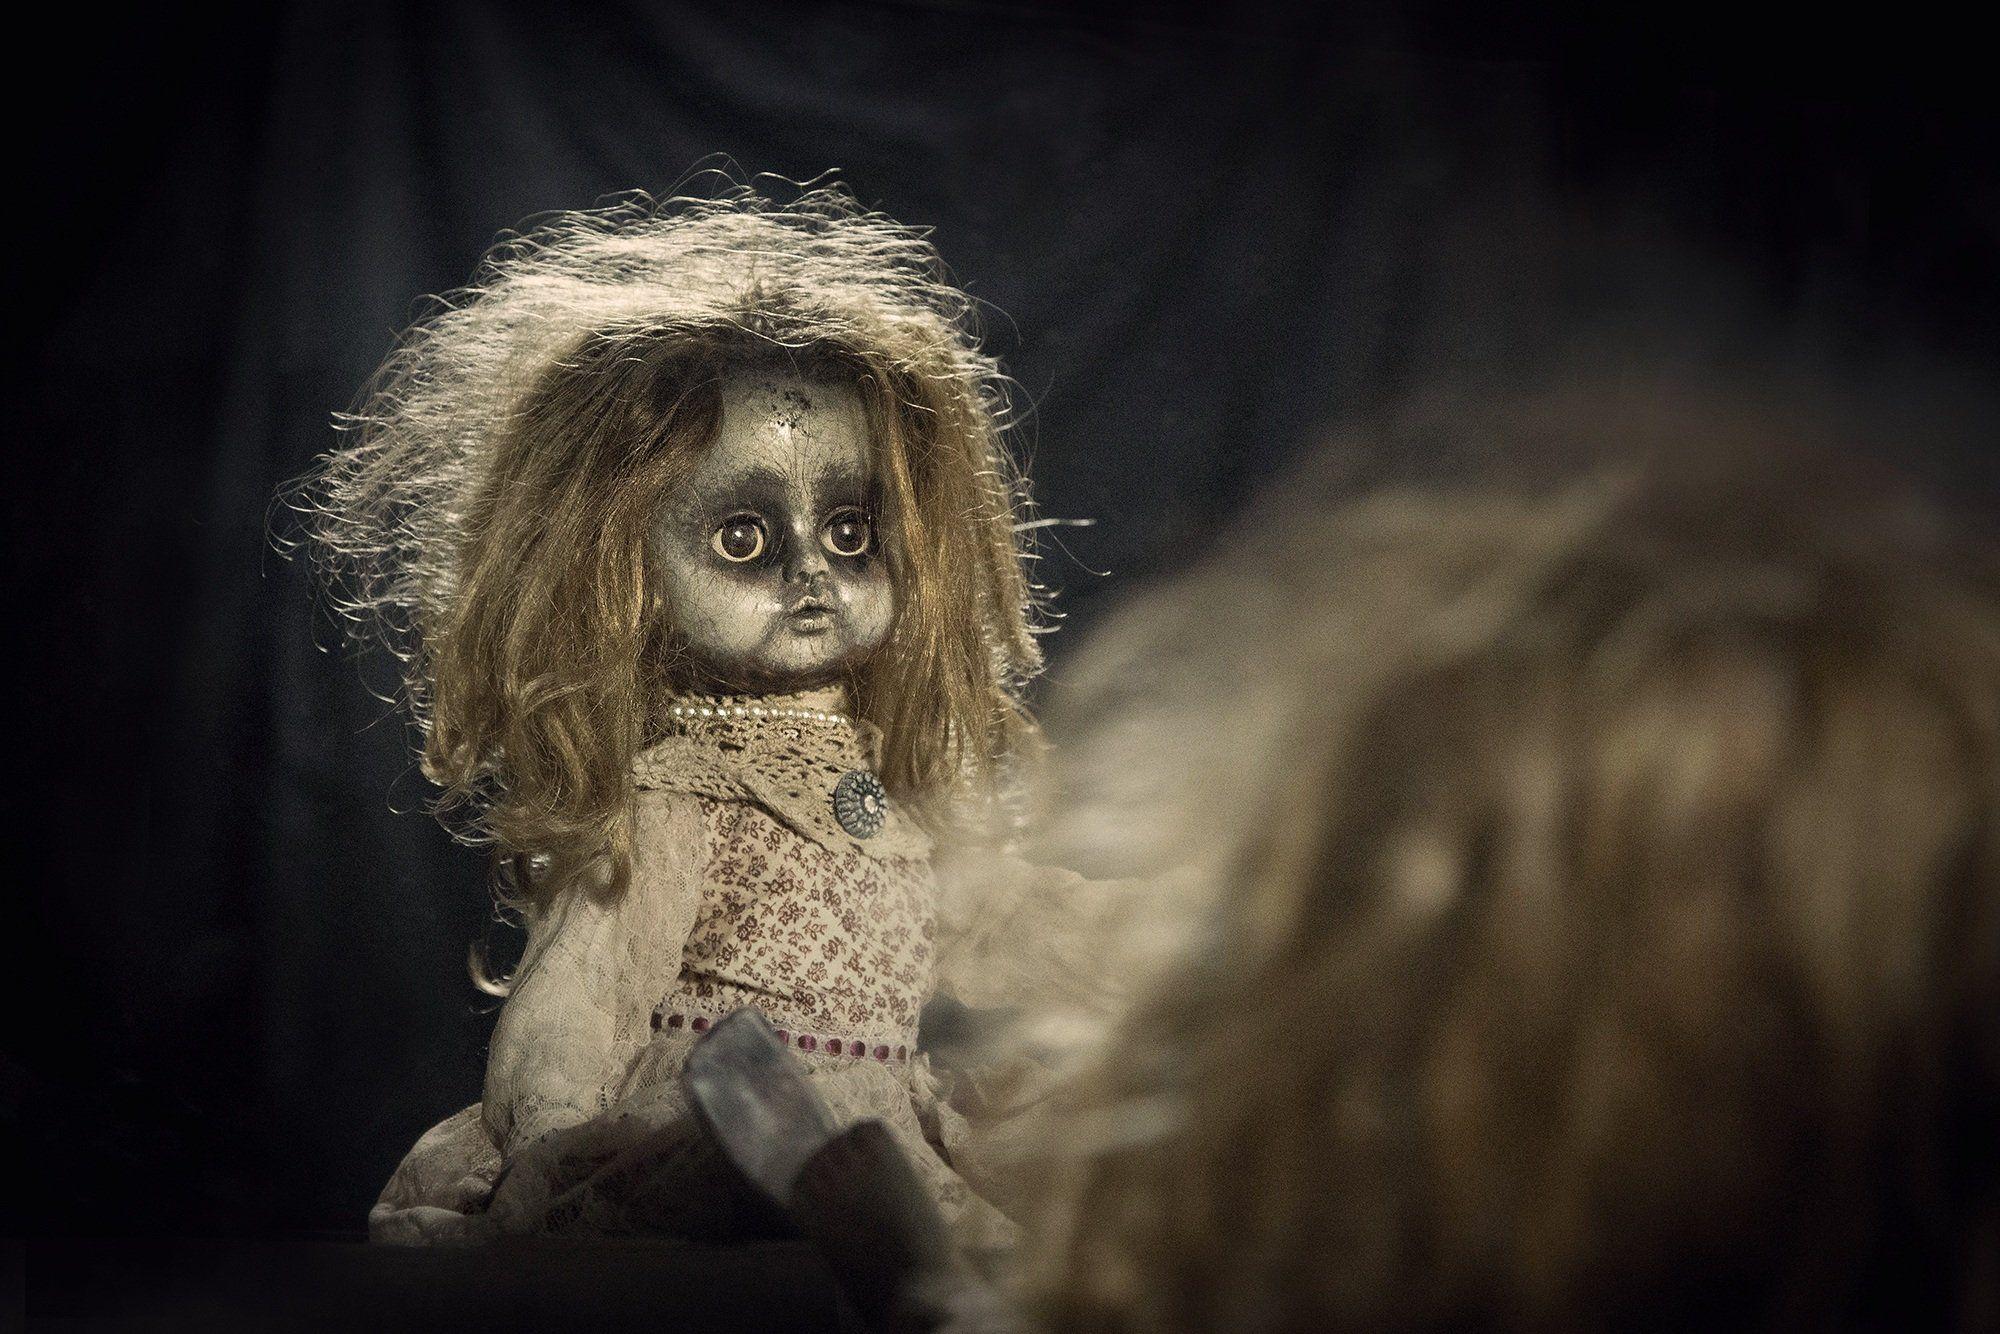 Doll Creepy Spooky Horror Toy Child Gothic Dark Wallpaper At Dark